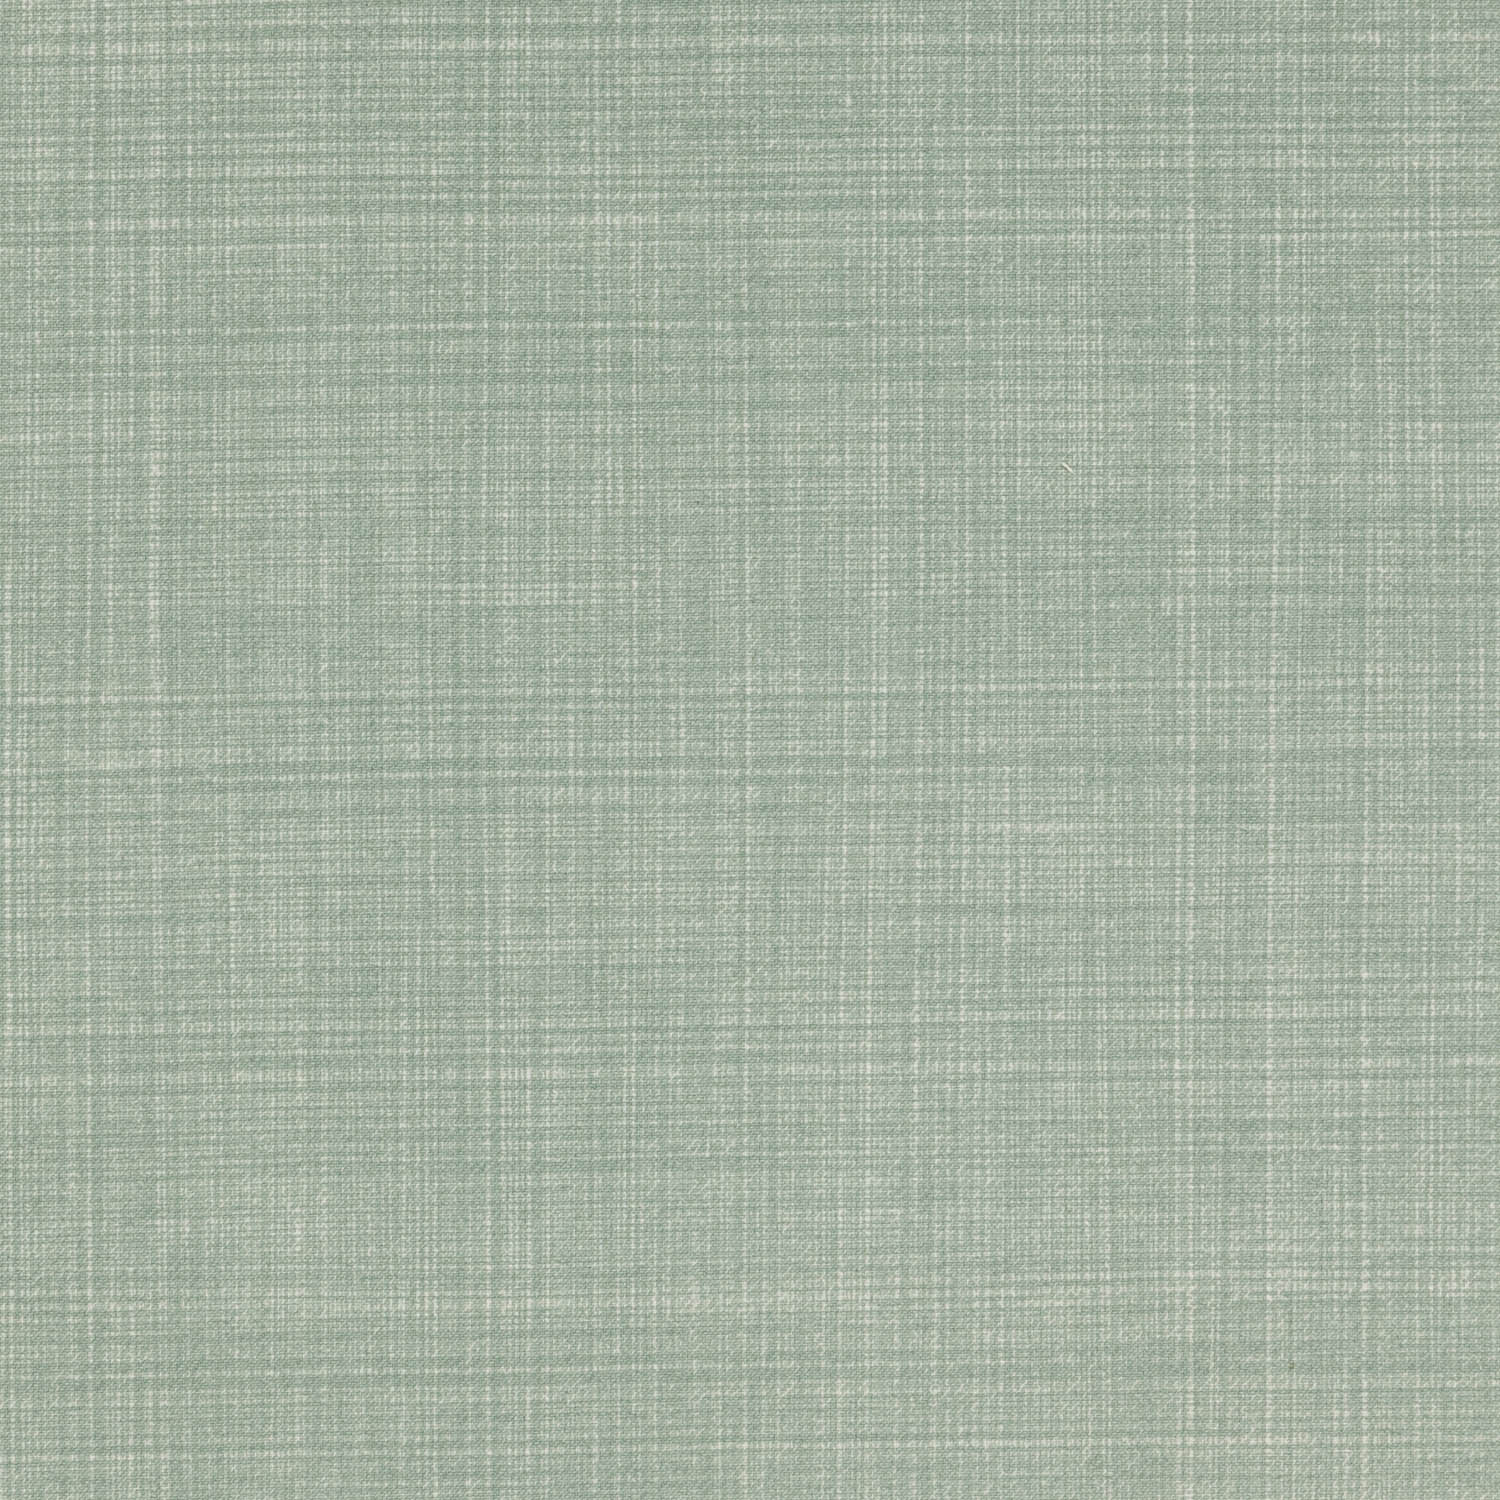 l-074-green-fermoie-plain-cotton-1.jpg